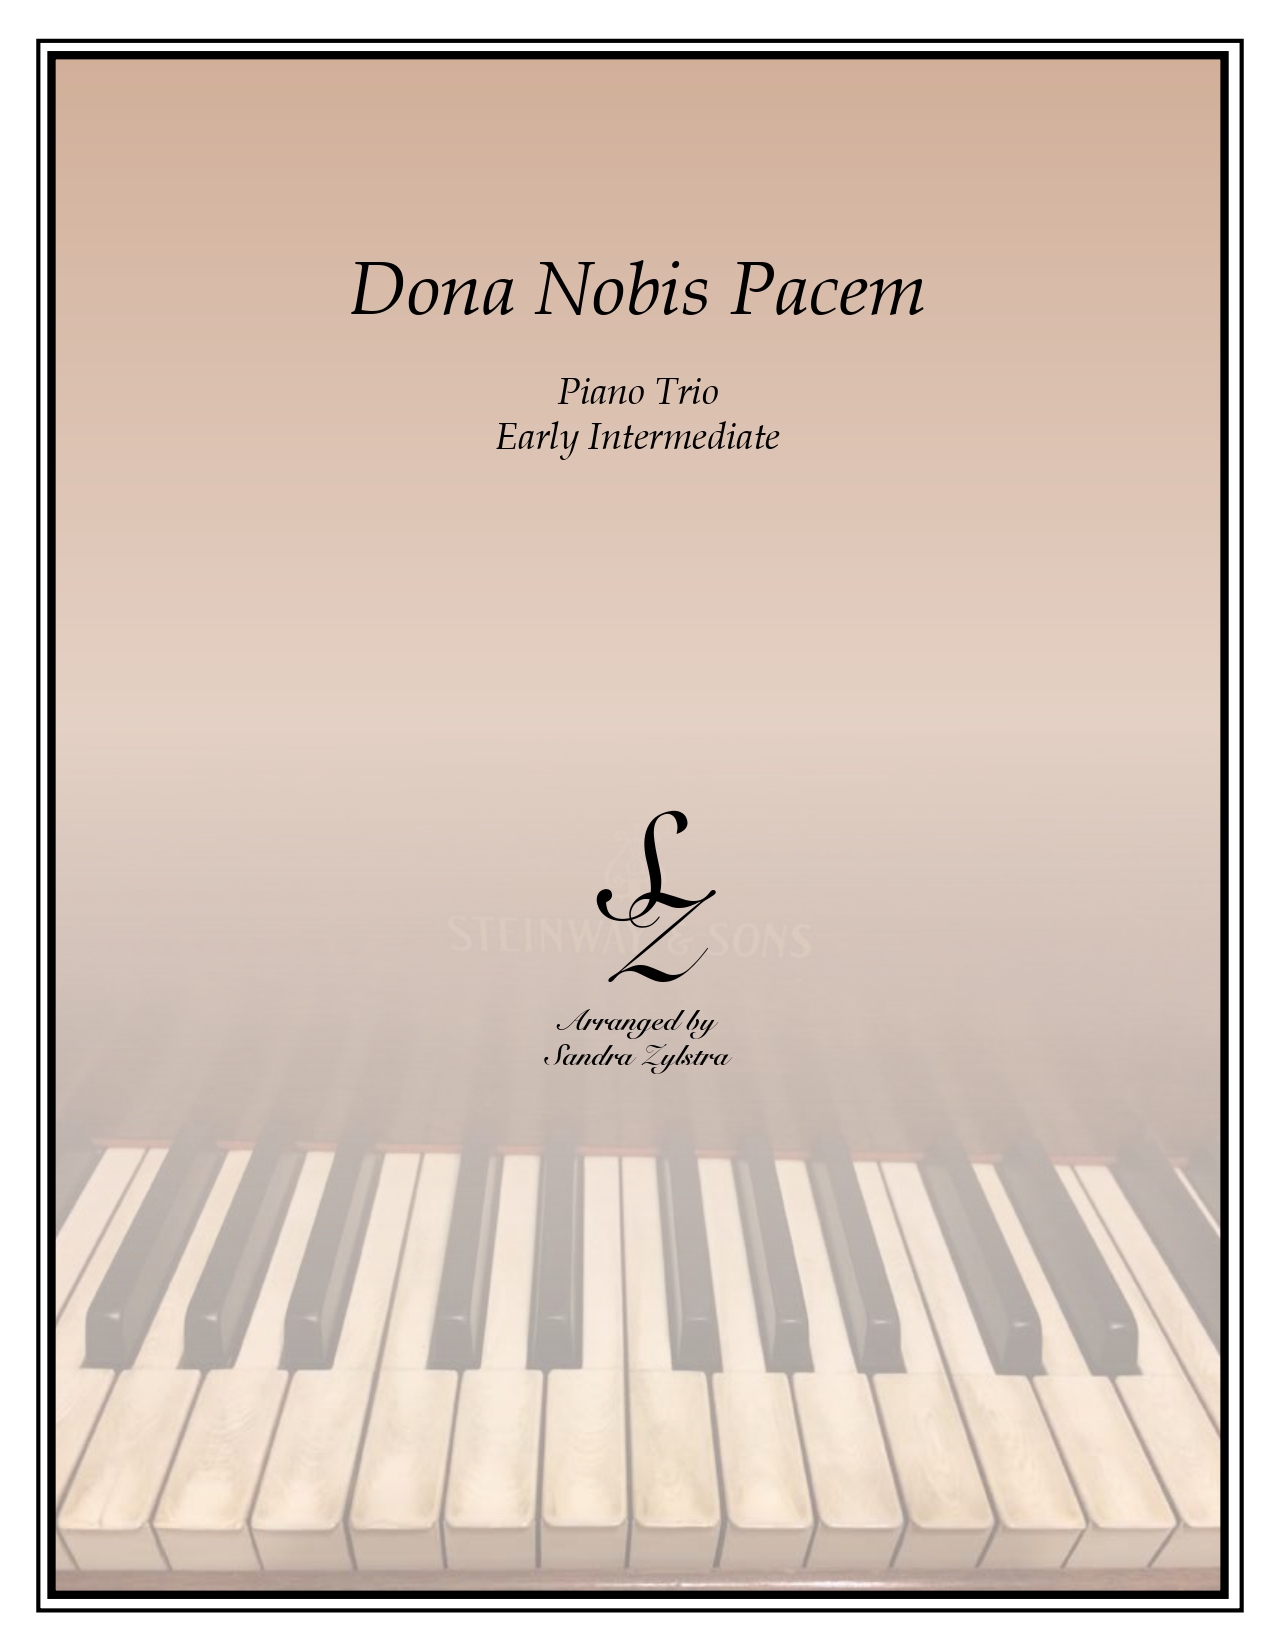 Dona Nobis Pacem trio parts cover page 00011